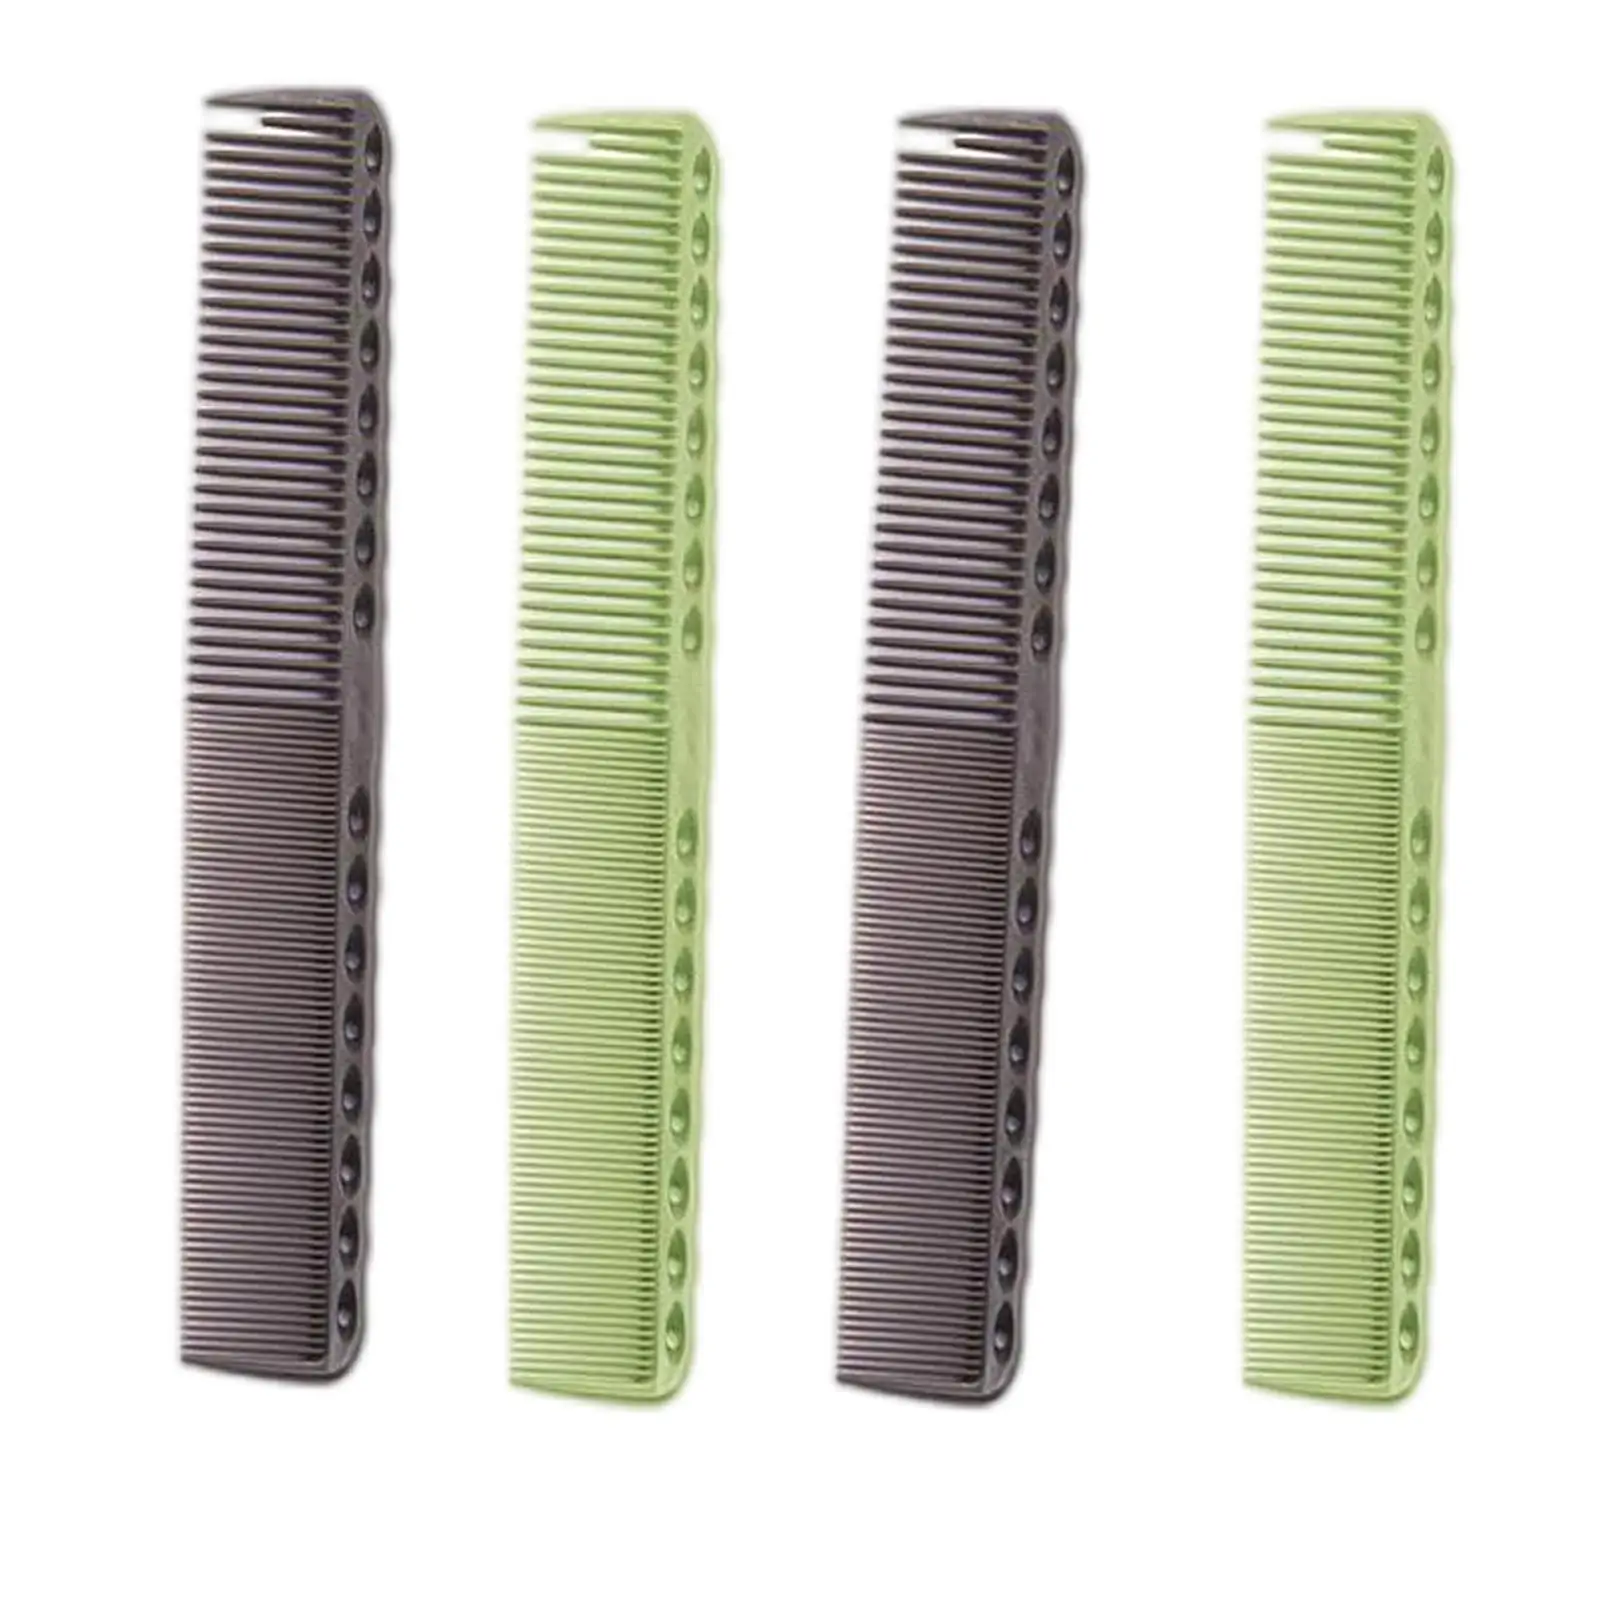 4pcs Professional Barber dressing Comb  Cutting Styling Combs Tool